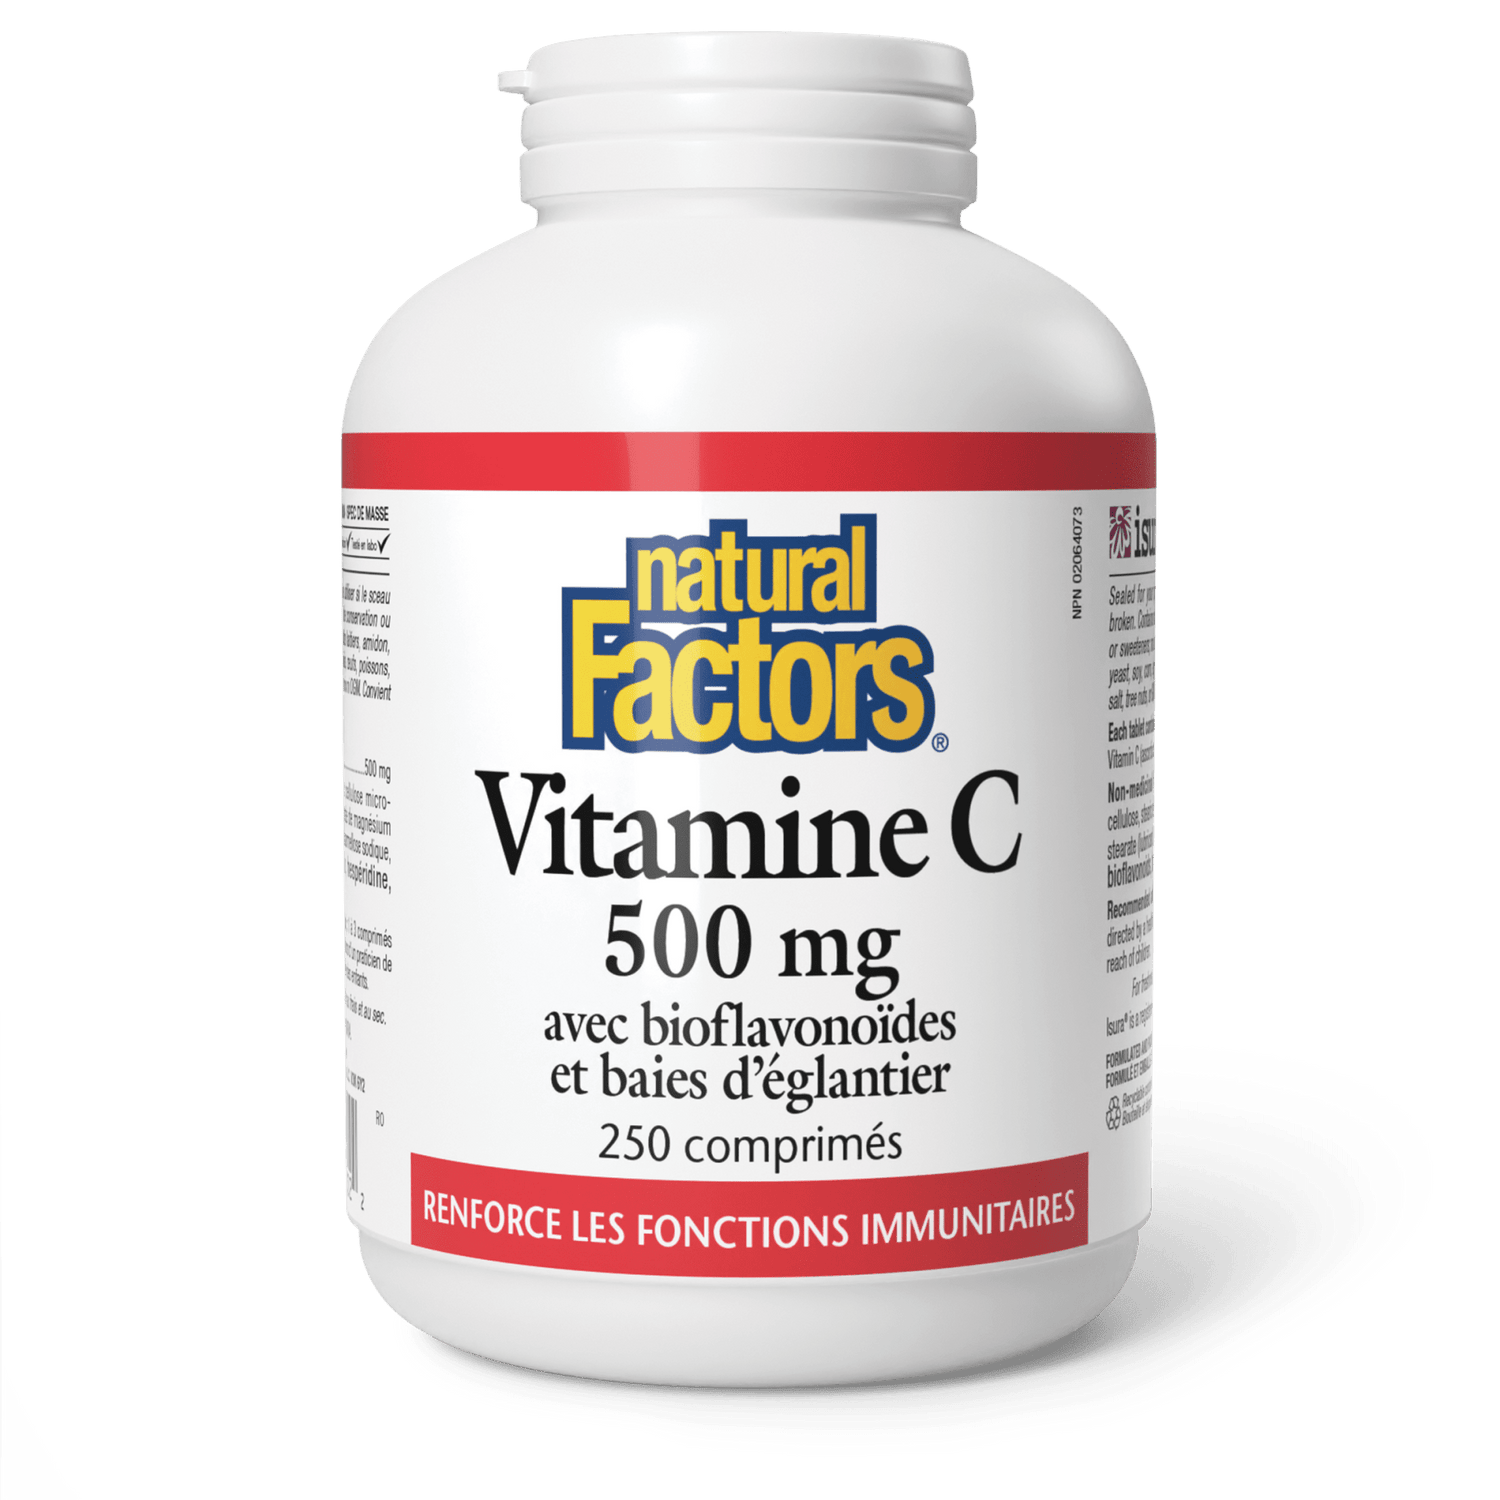 Vitamine C avec bioflavonoïdes & baies d’églantier 500 mg, Natural Factors|v|image|1302